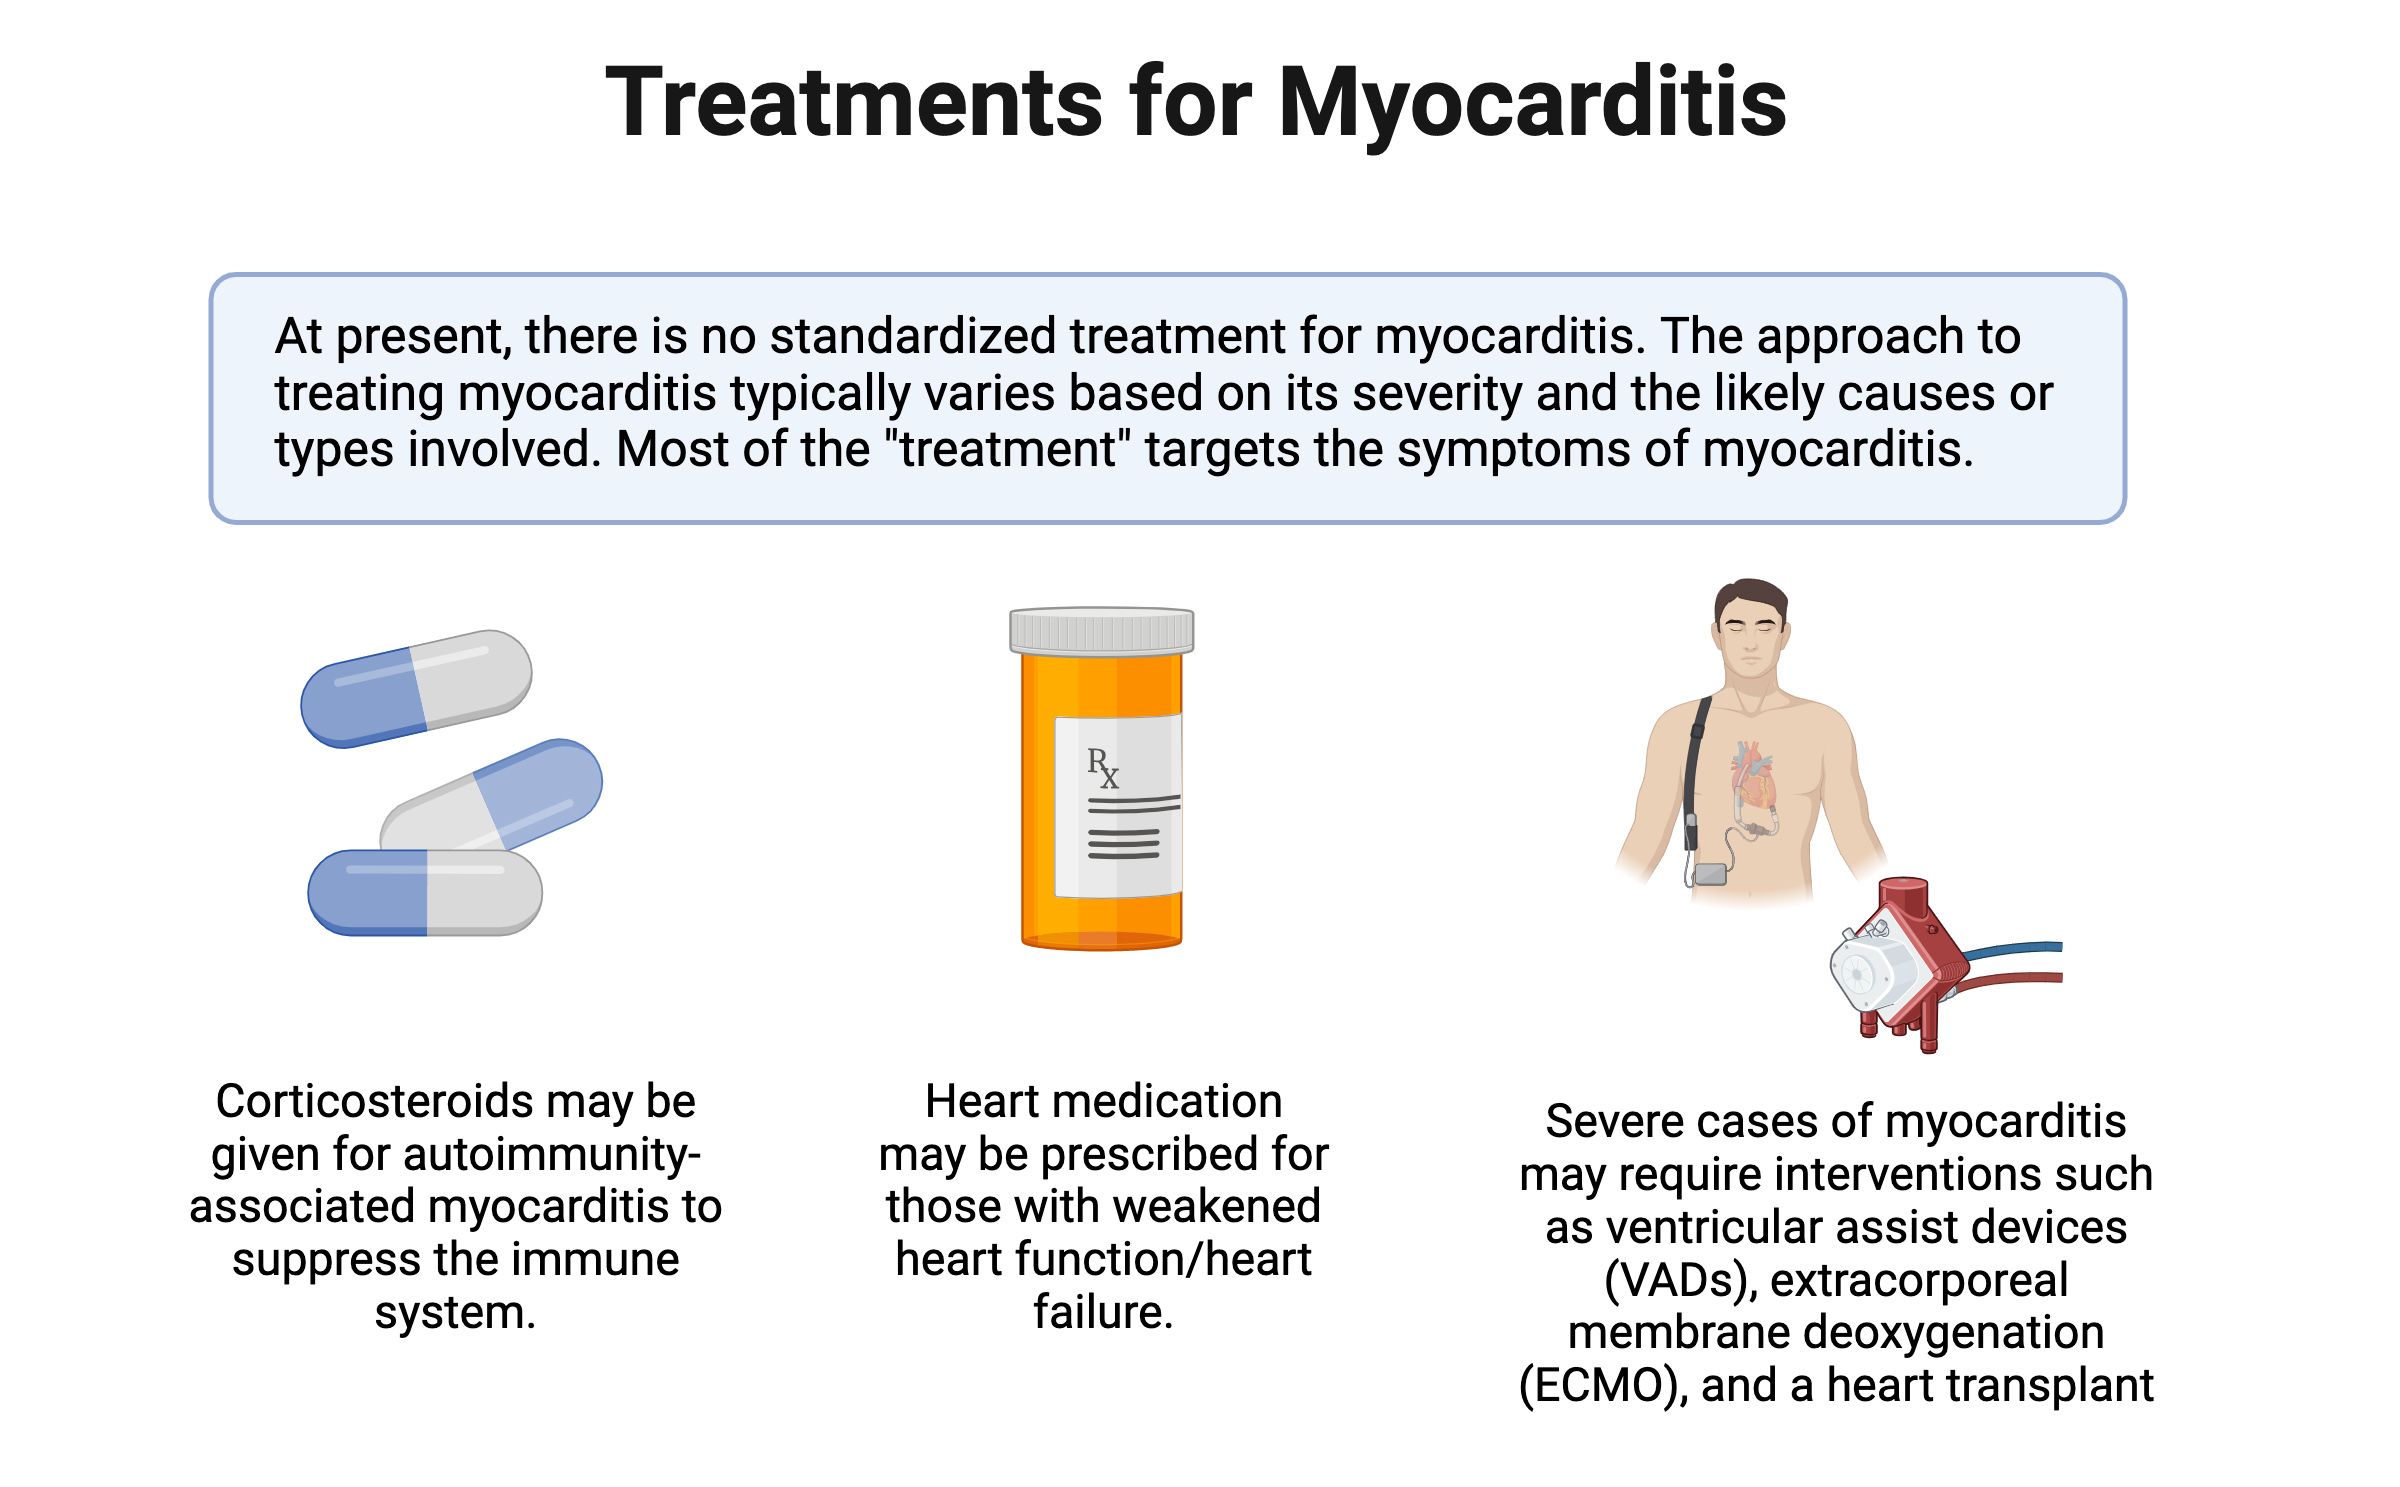 Treatment of myocarditis